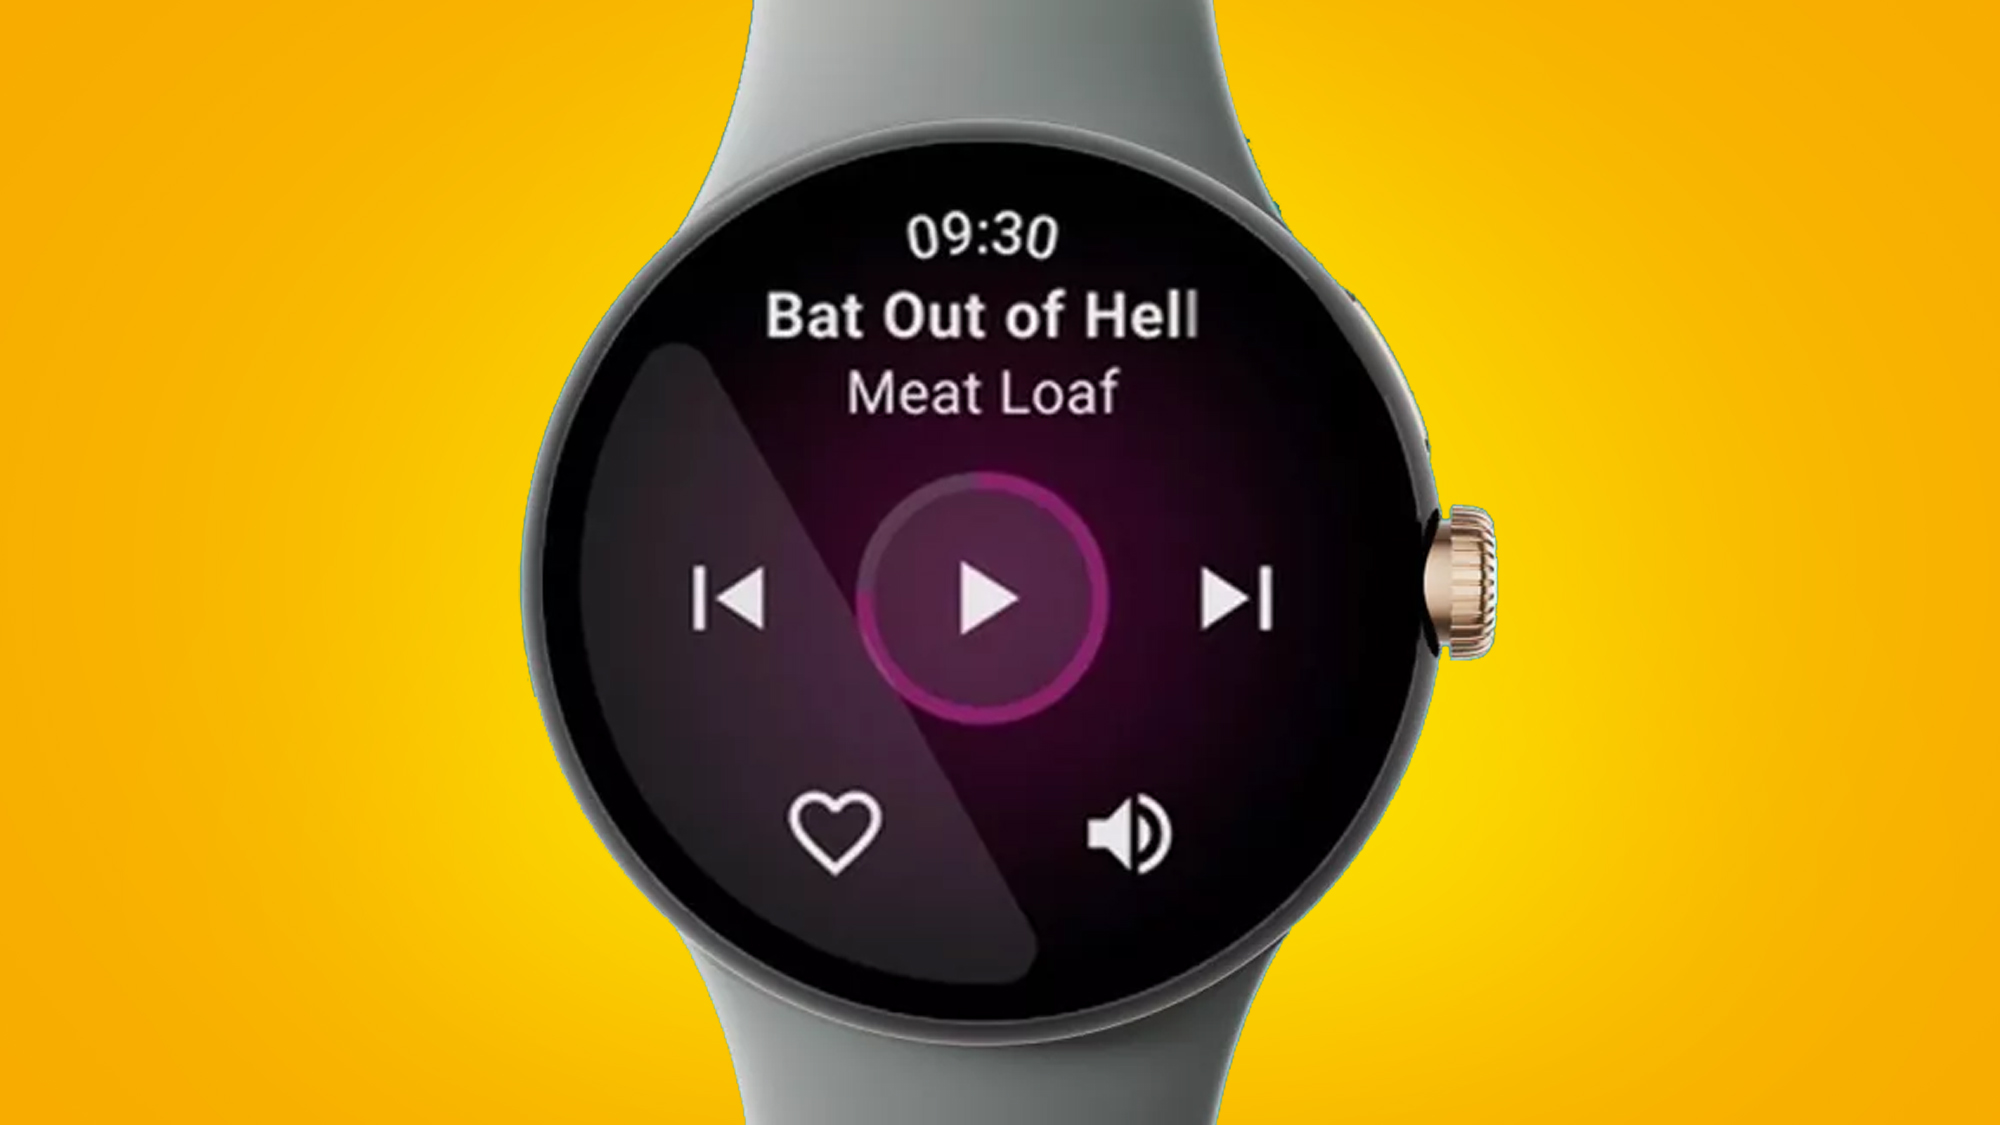 A smartwatch on an orange background showing Google Wear OS